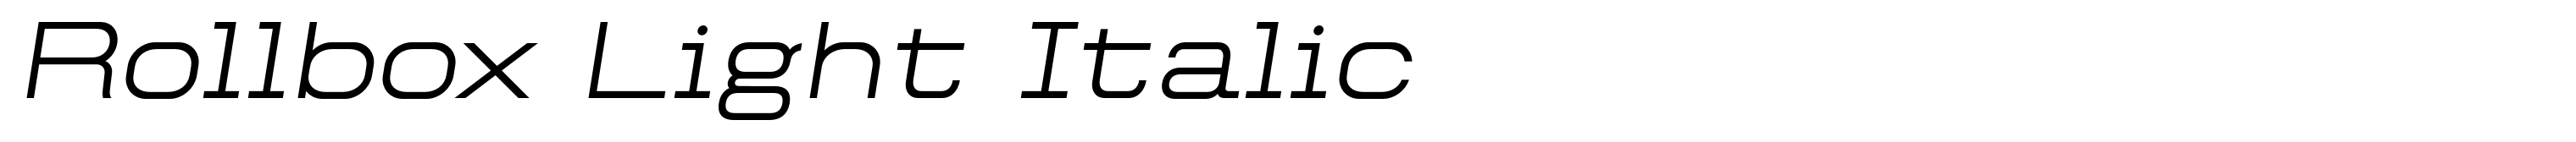 Rollbox Light Italic